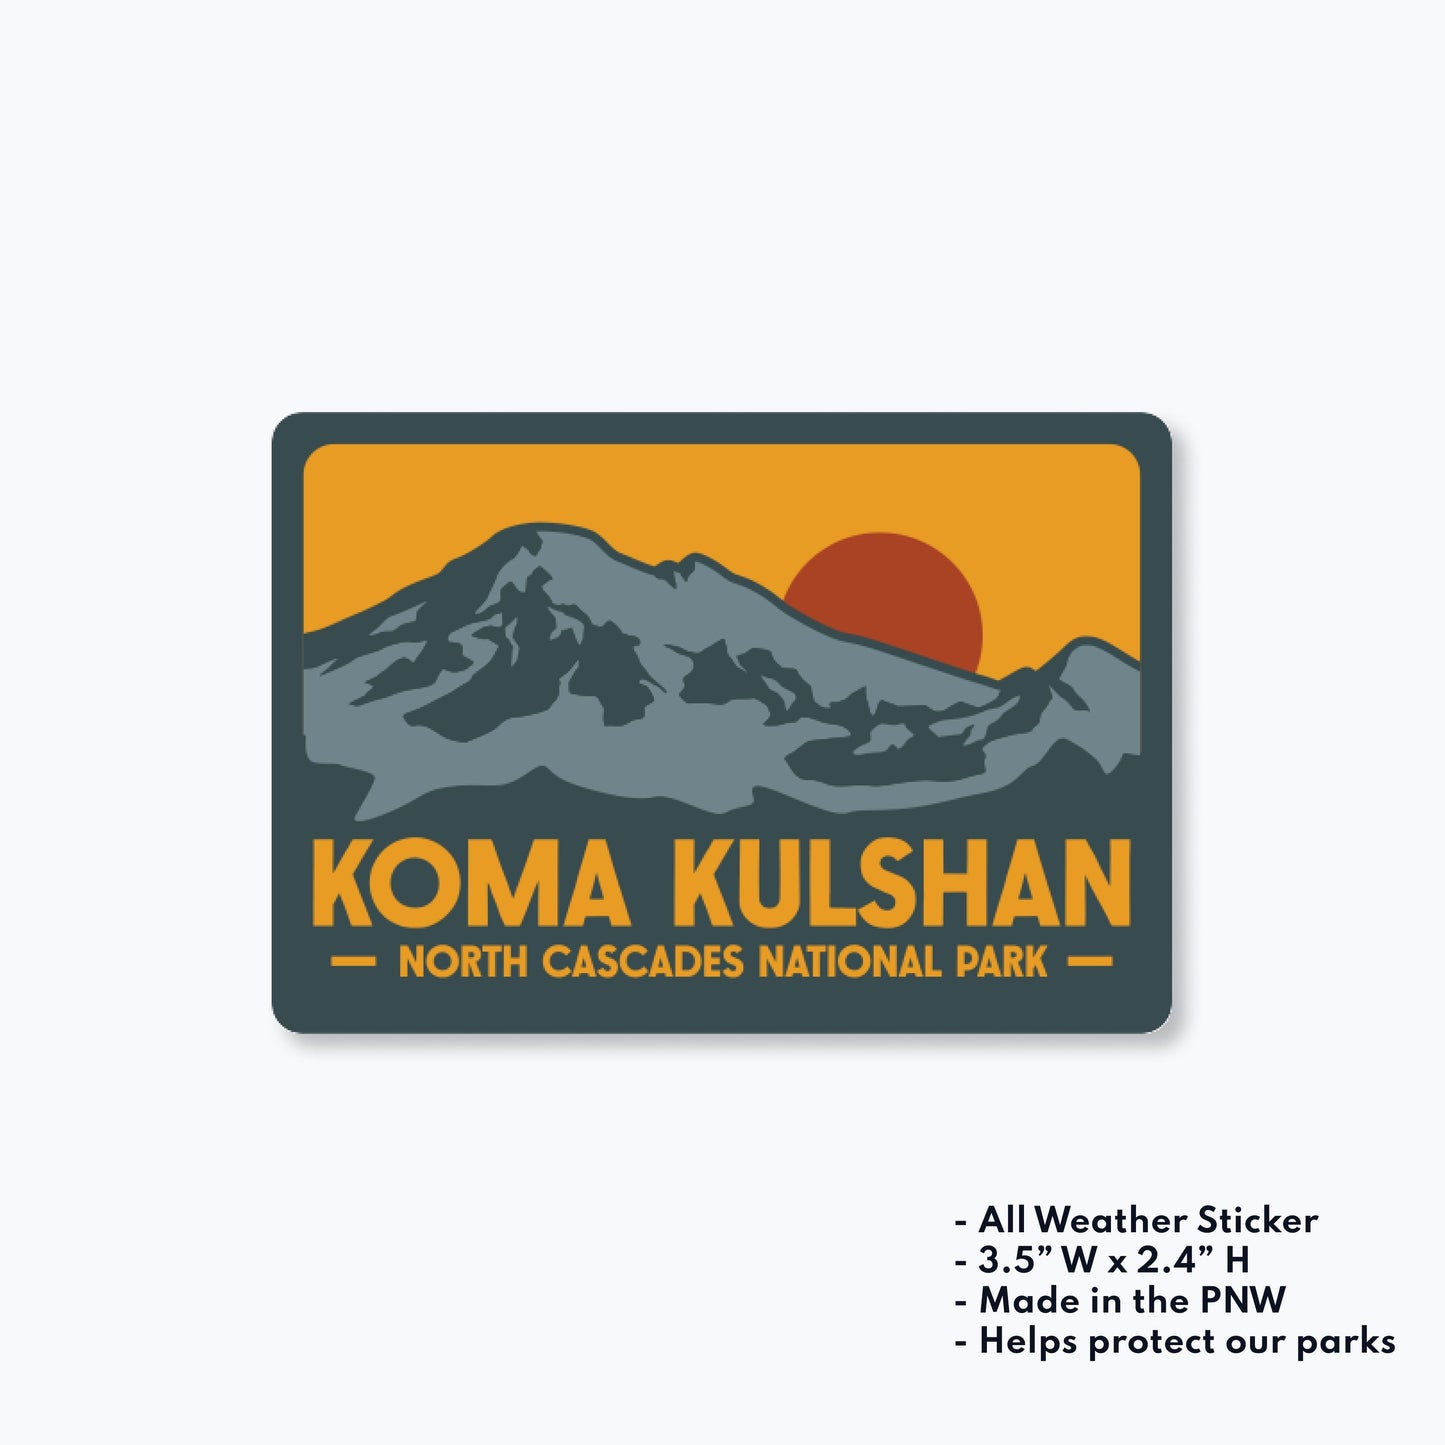 Koma Kulshan North Cascades National Park Sticker